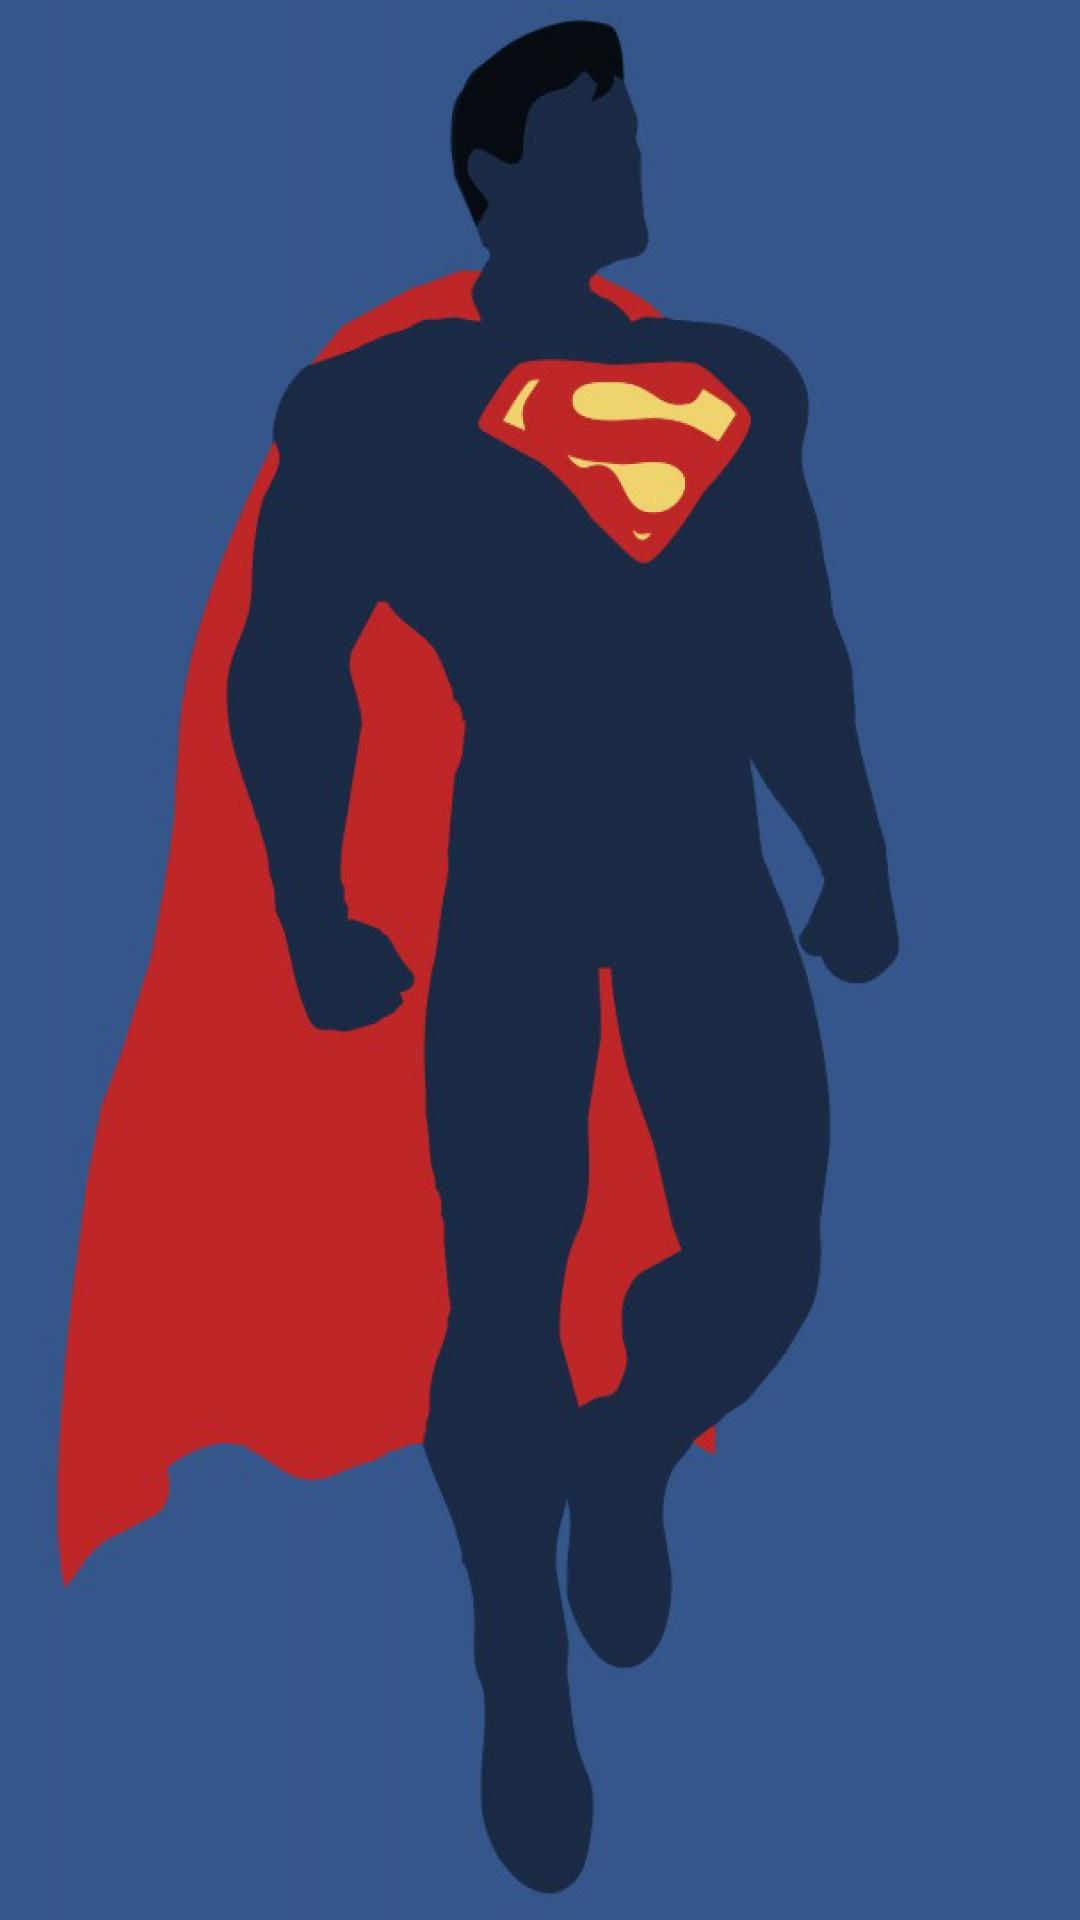 Wallpapers Superheroes Superman Iphone Image Free Download